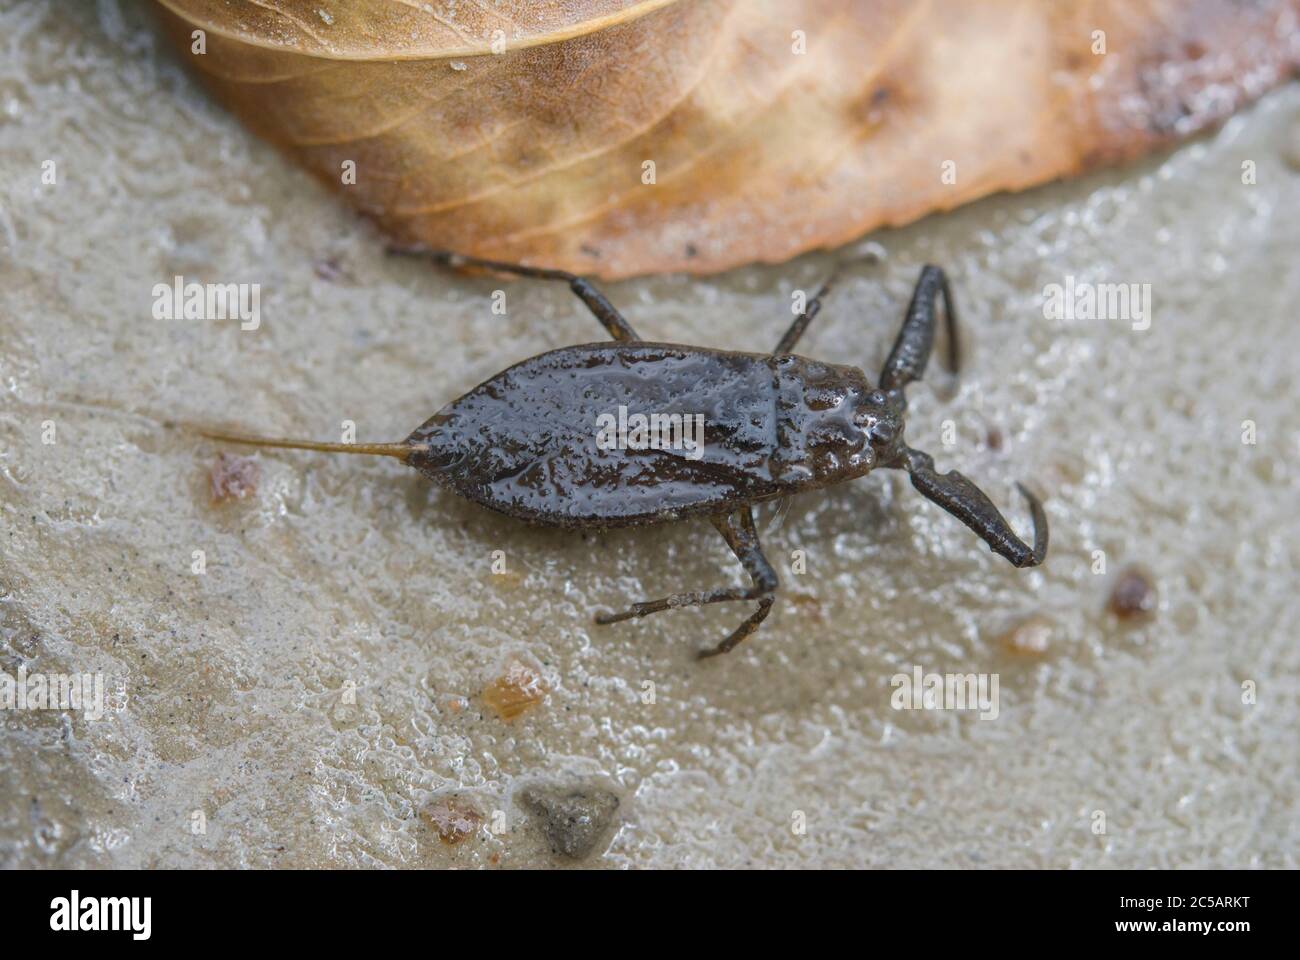 The Water scorpion (Nepa cinerea) Stock Photo